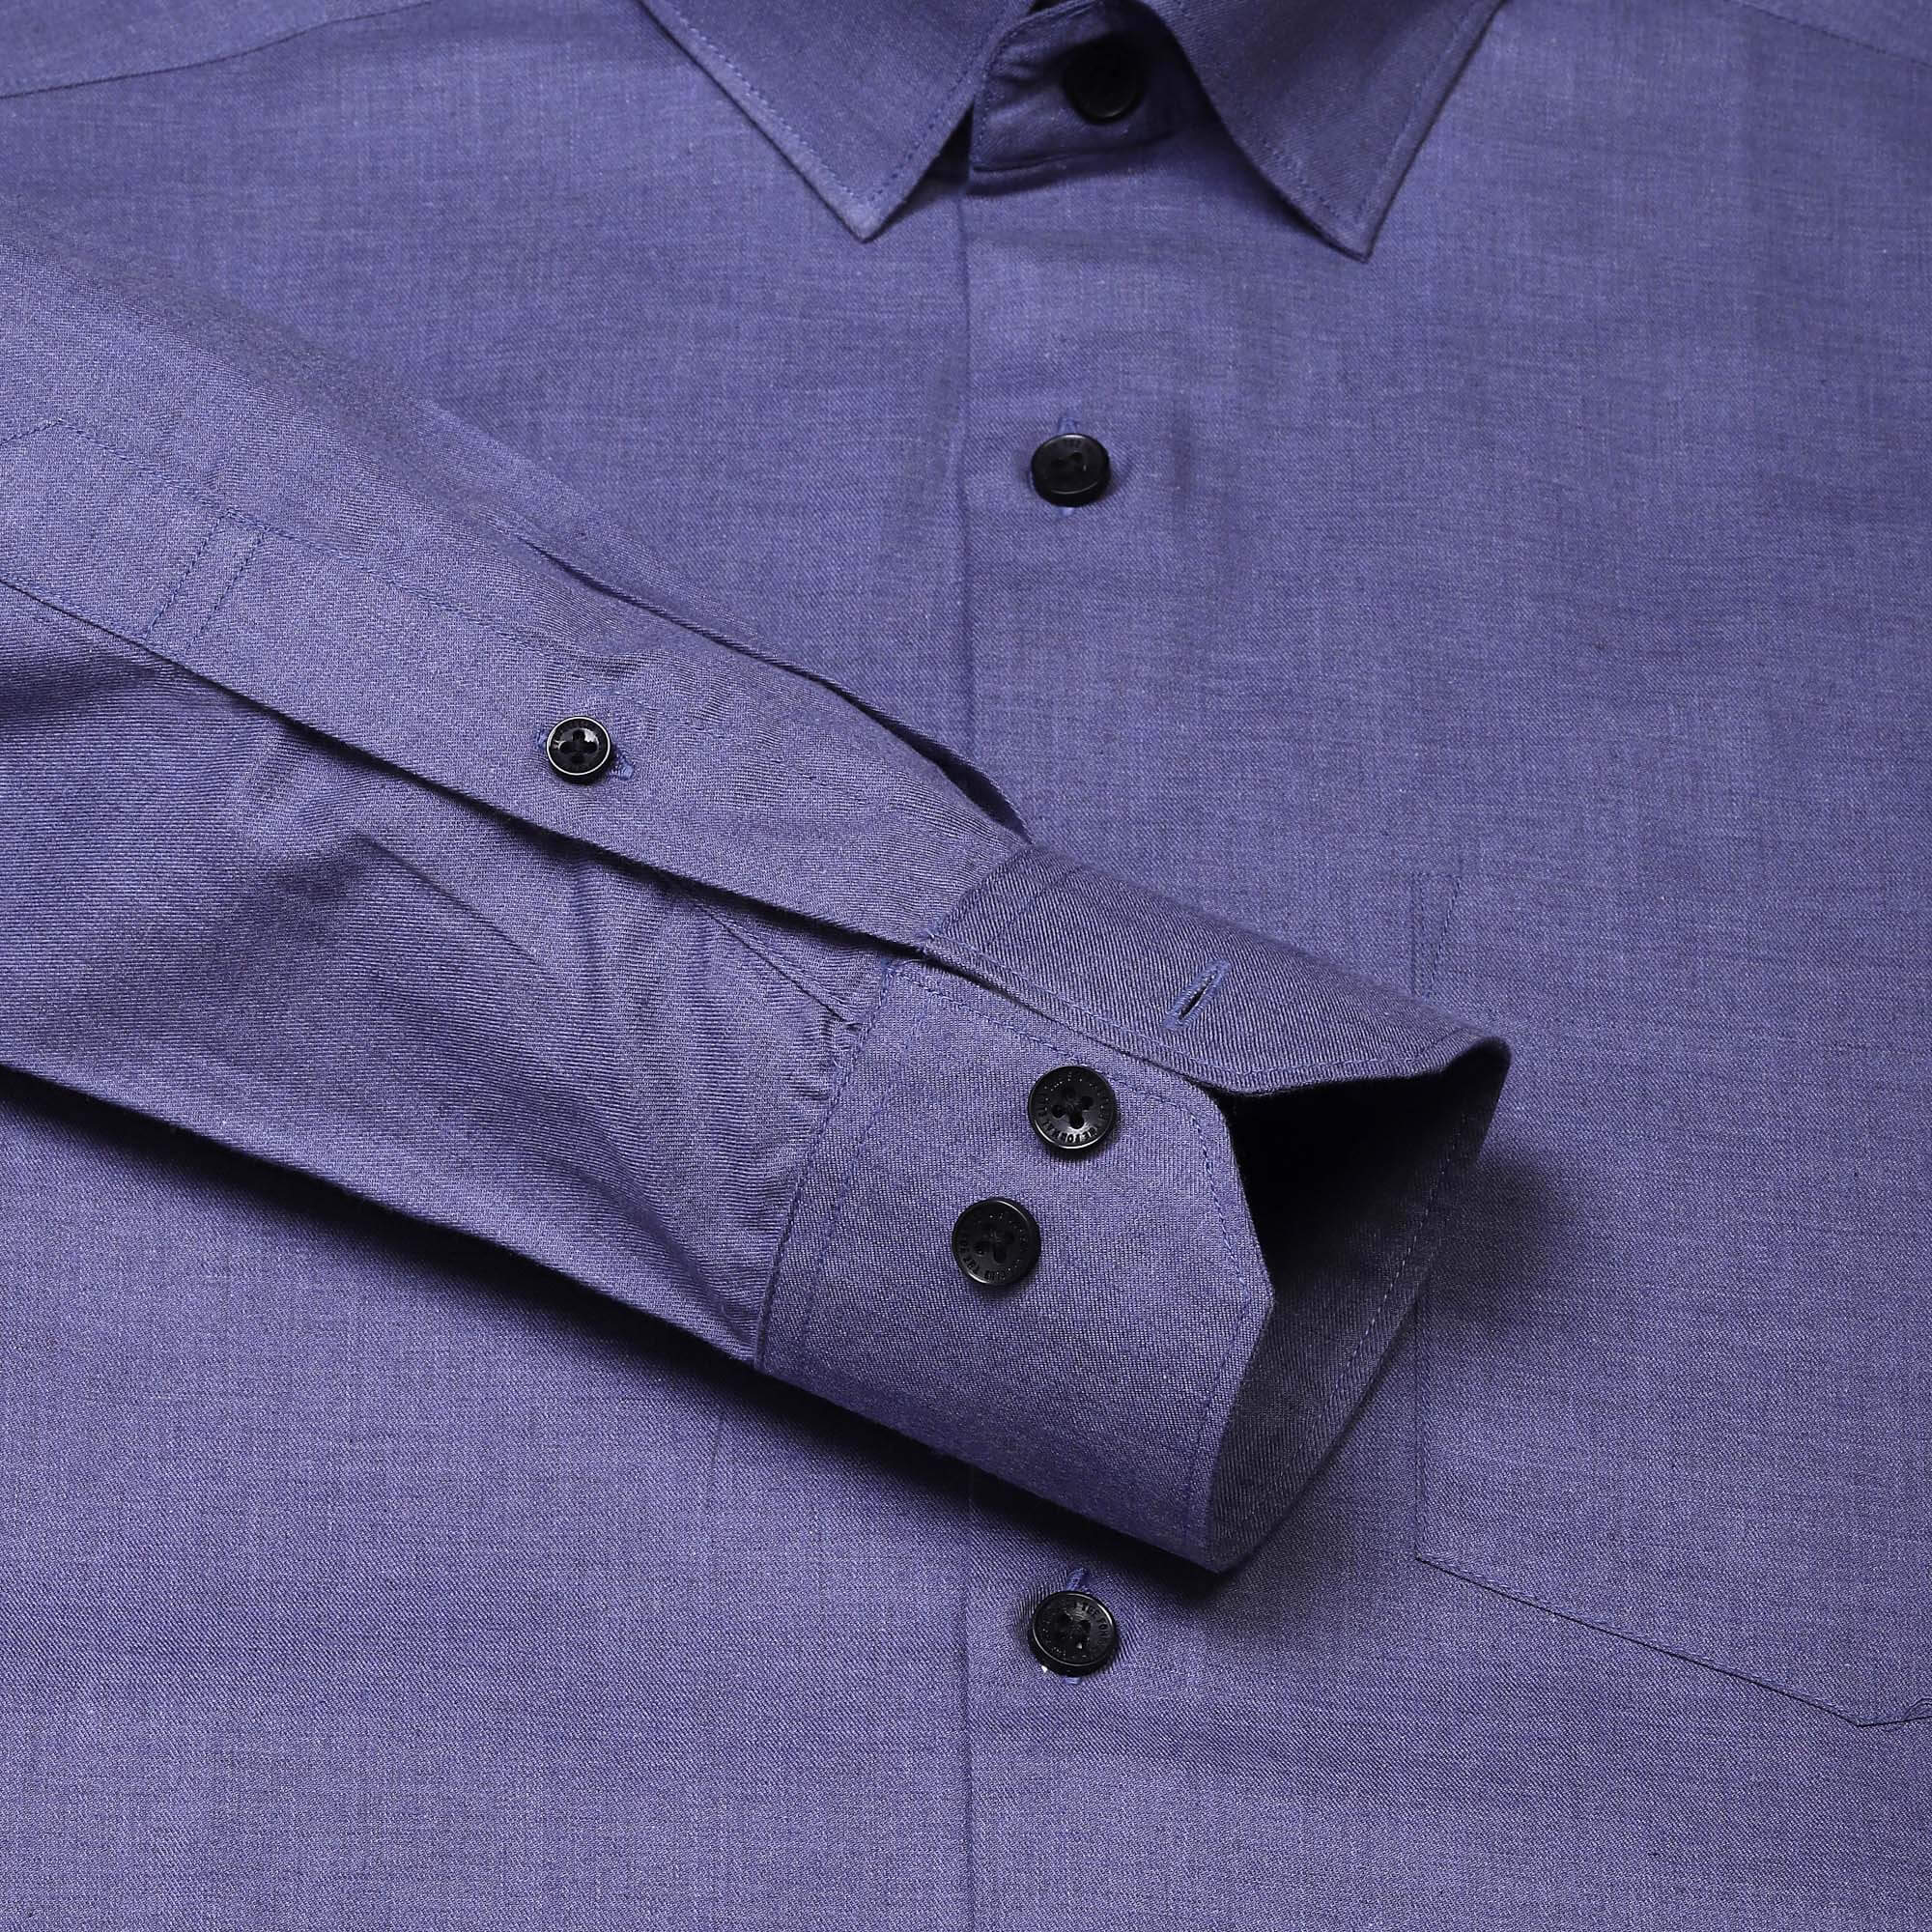 Blendix Twill Solid Shirt In Blue Slim Fit - The Formal Club